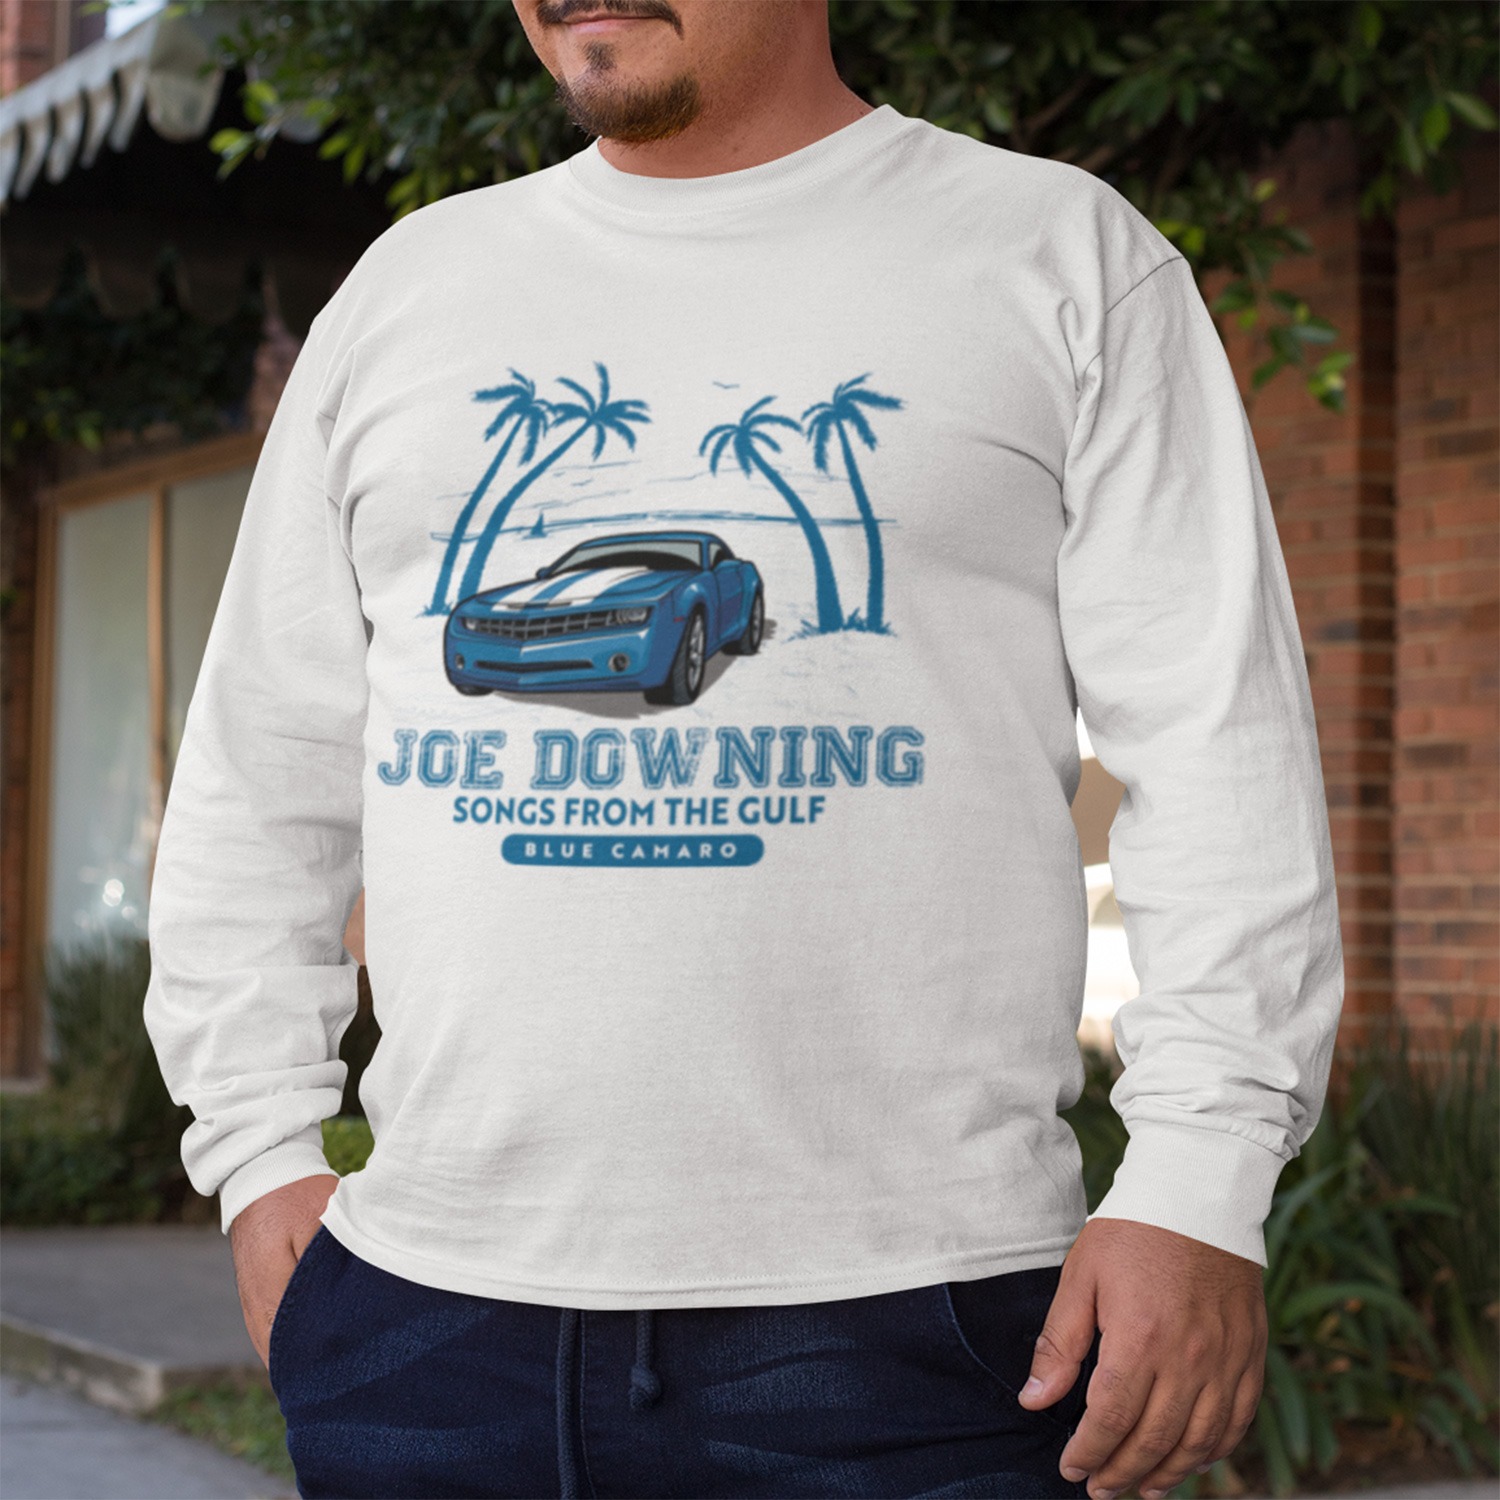 Joe Downing, The Troprock Shop